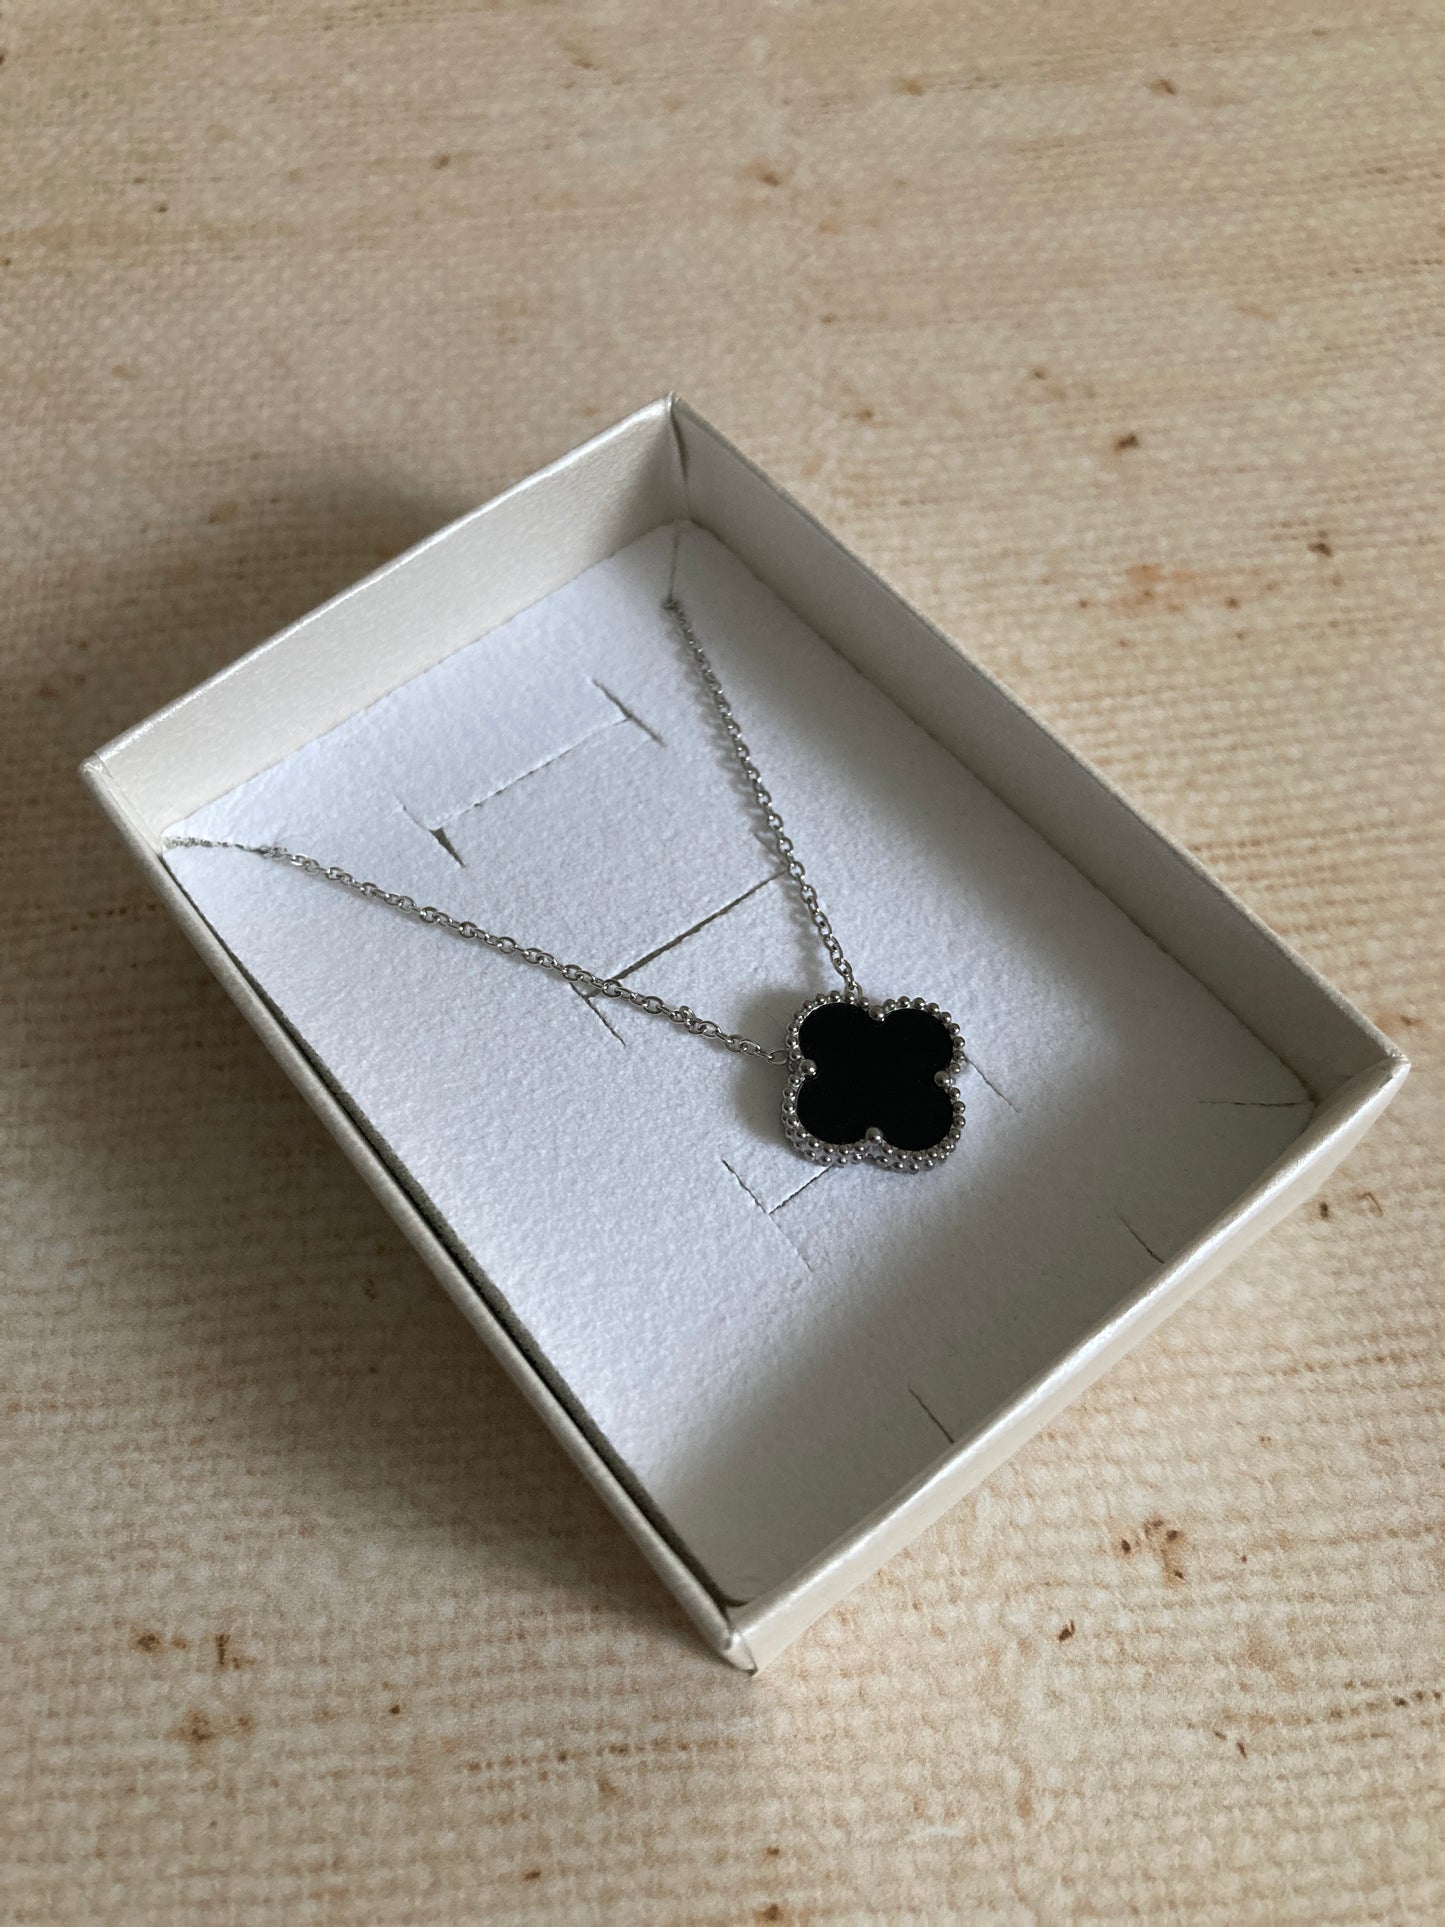 Black Single Clover Silver Necklace (ST919)